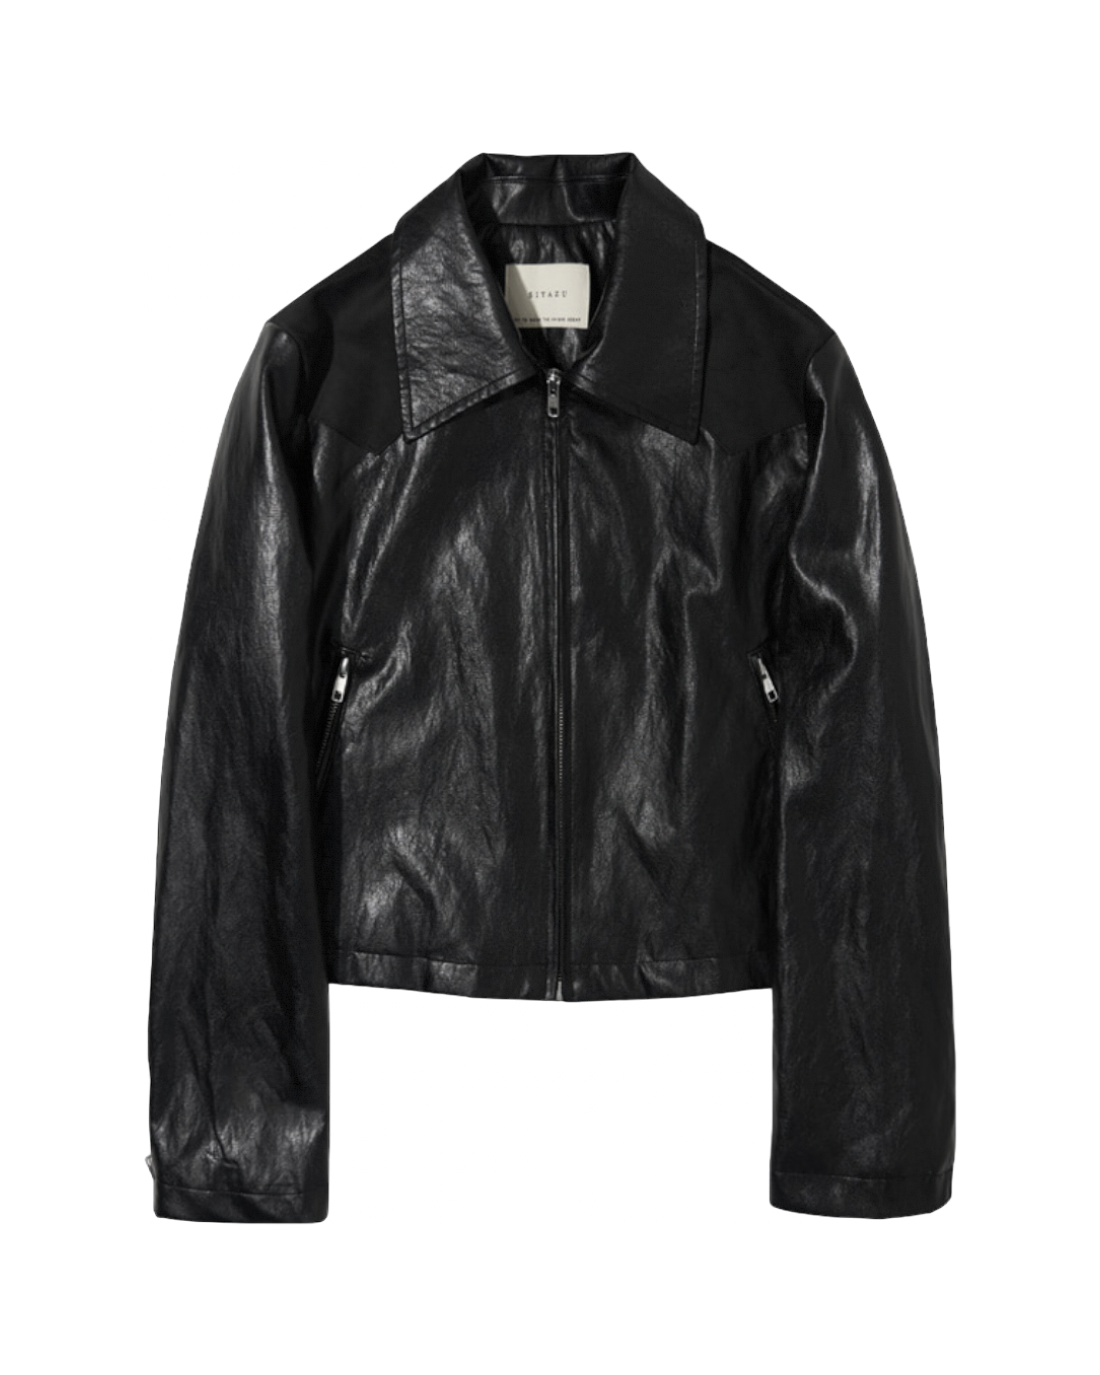 Western Leather Jacket In Black